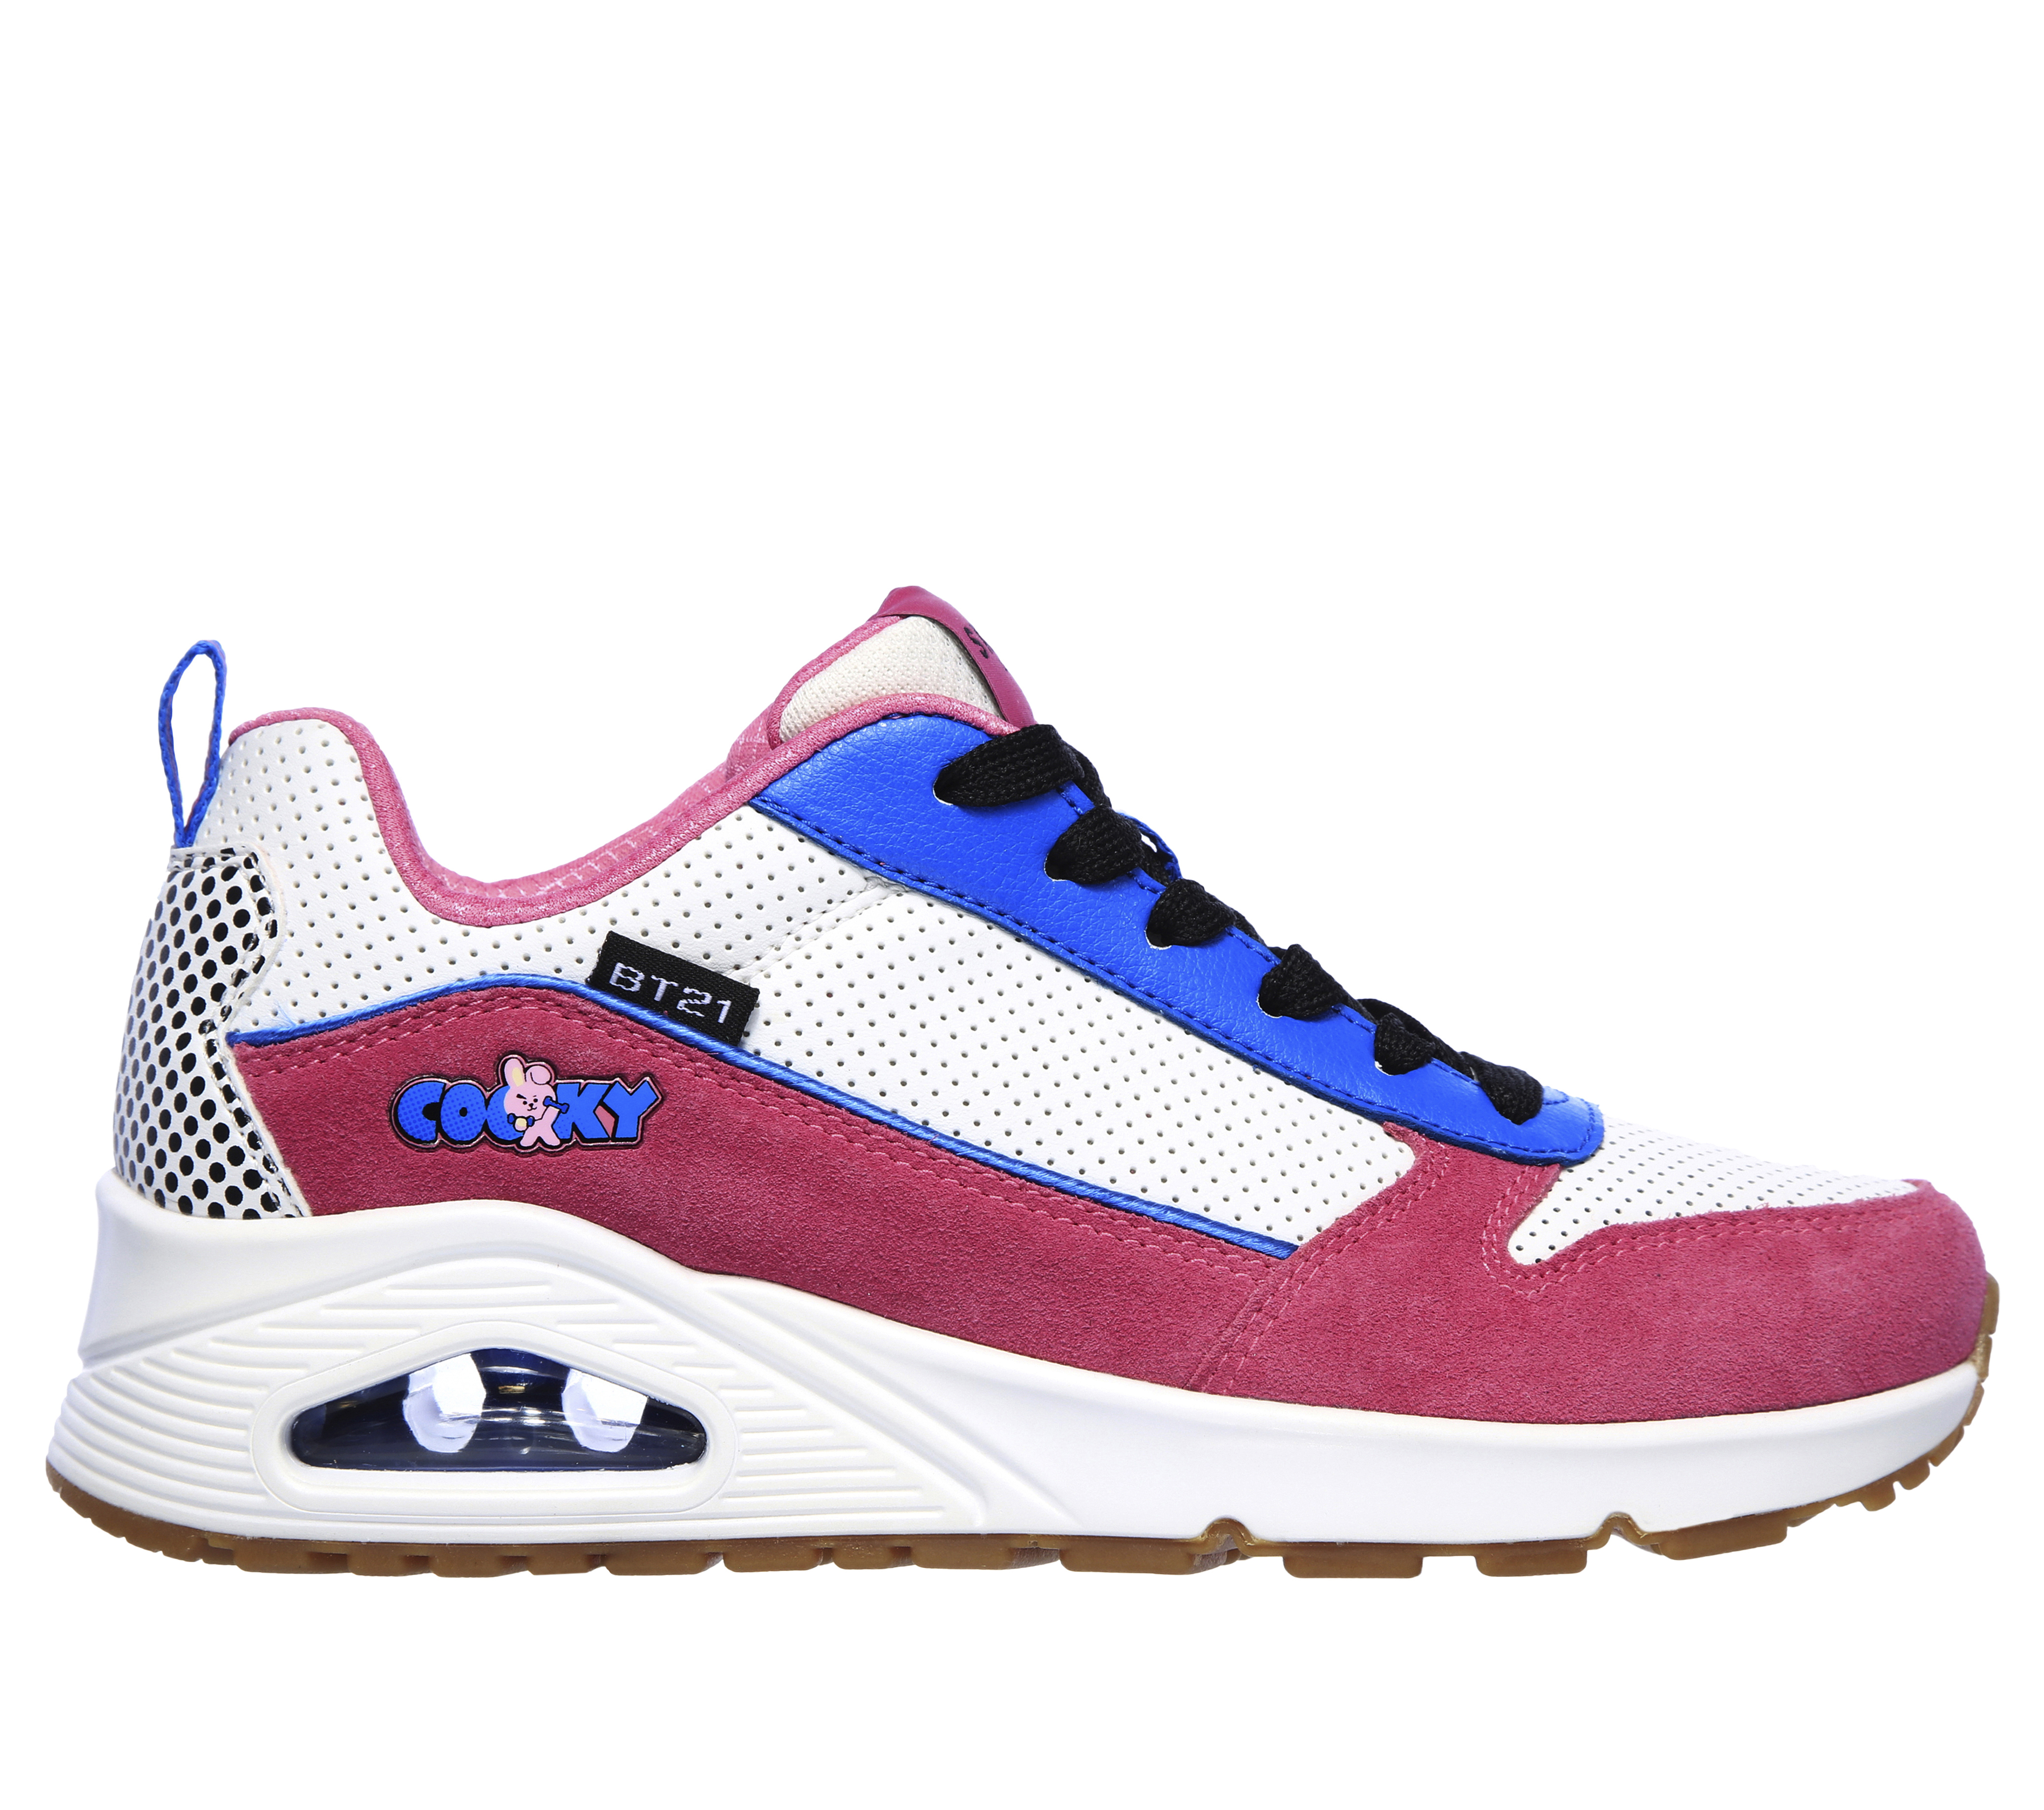 skechers pink tennis shoes